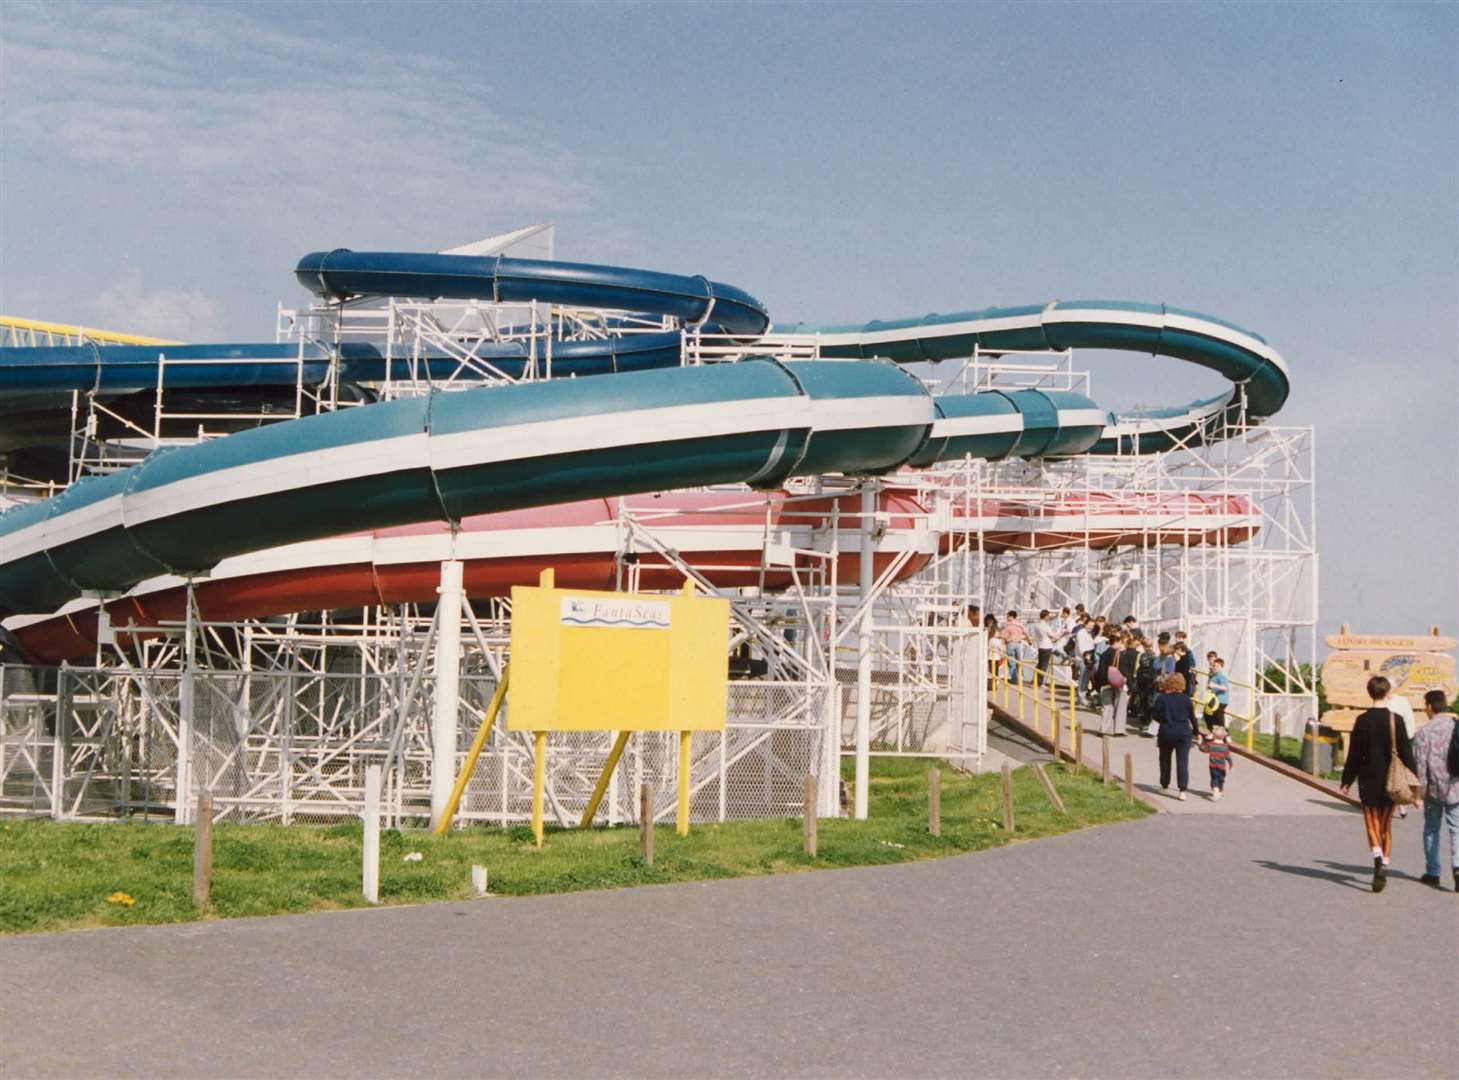 Fantasea Water Park was a popular attraction in Dartford until its closure in 1992.